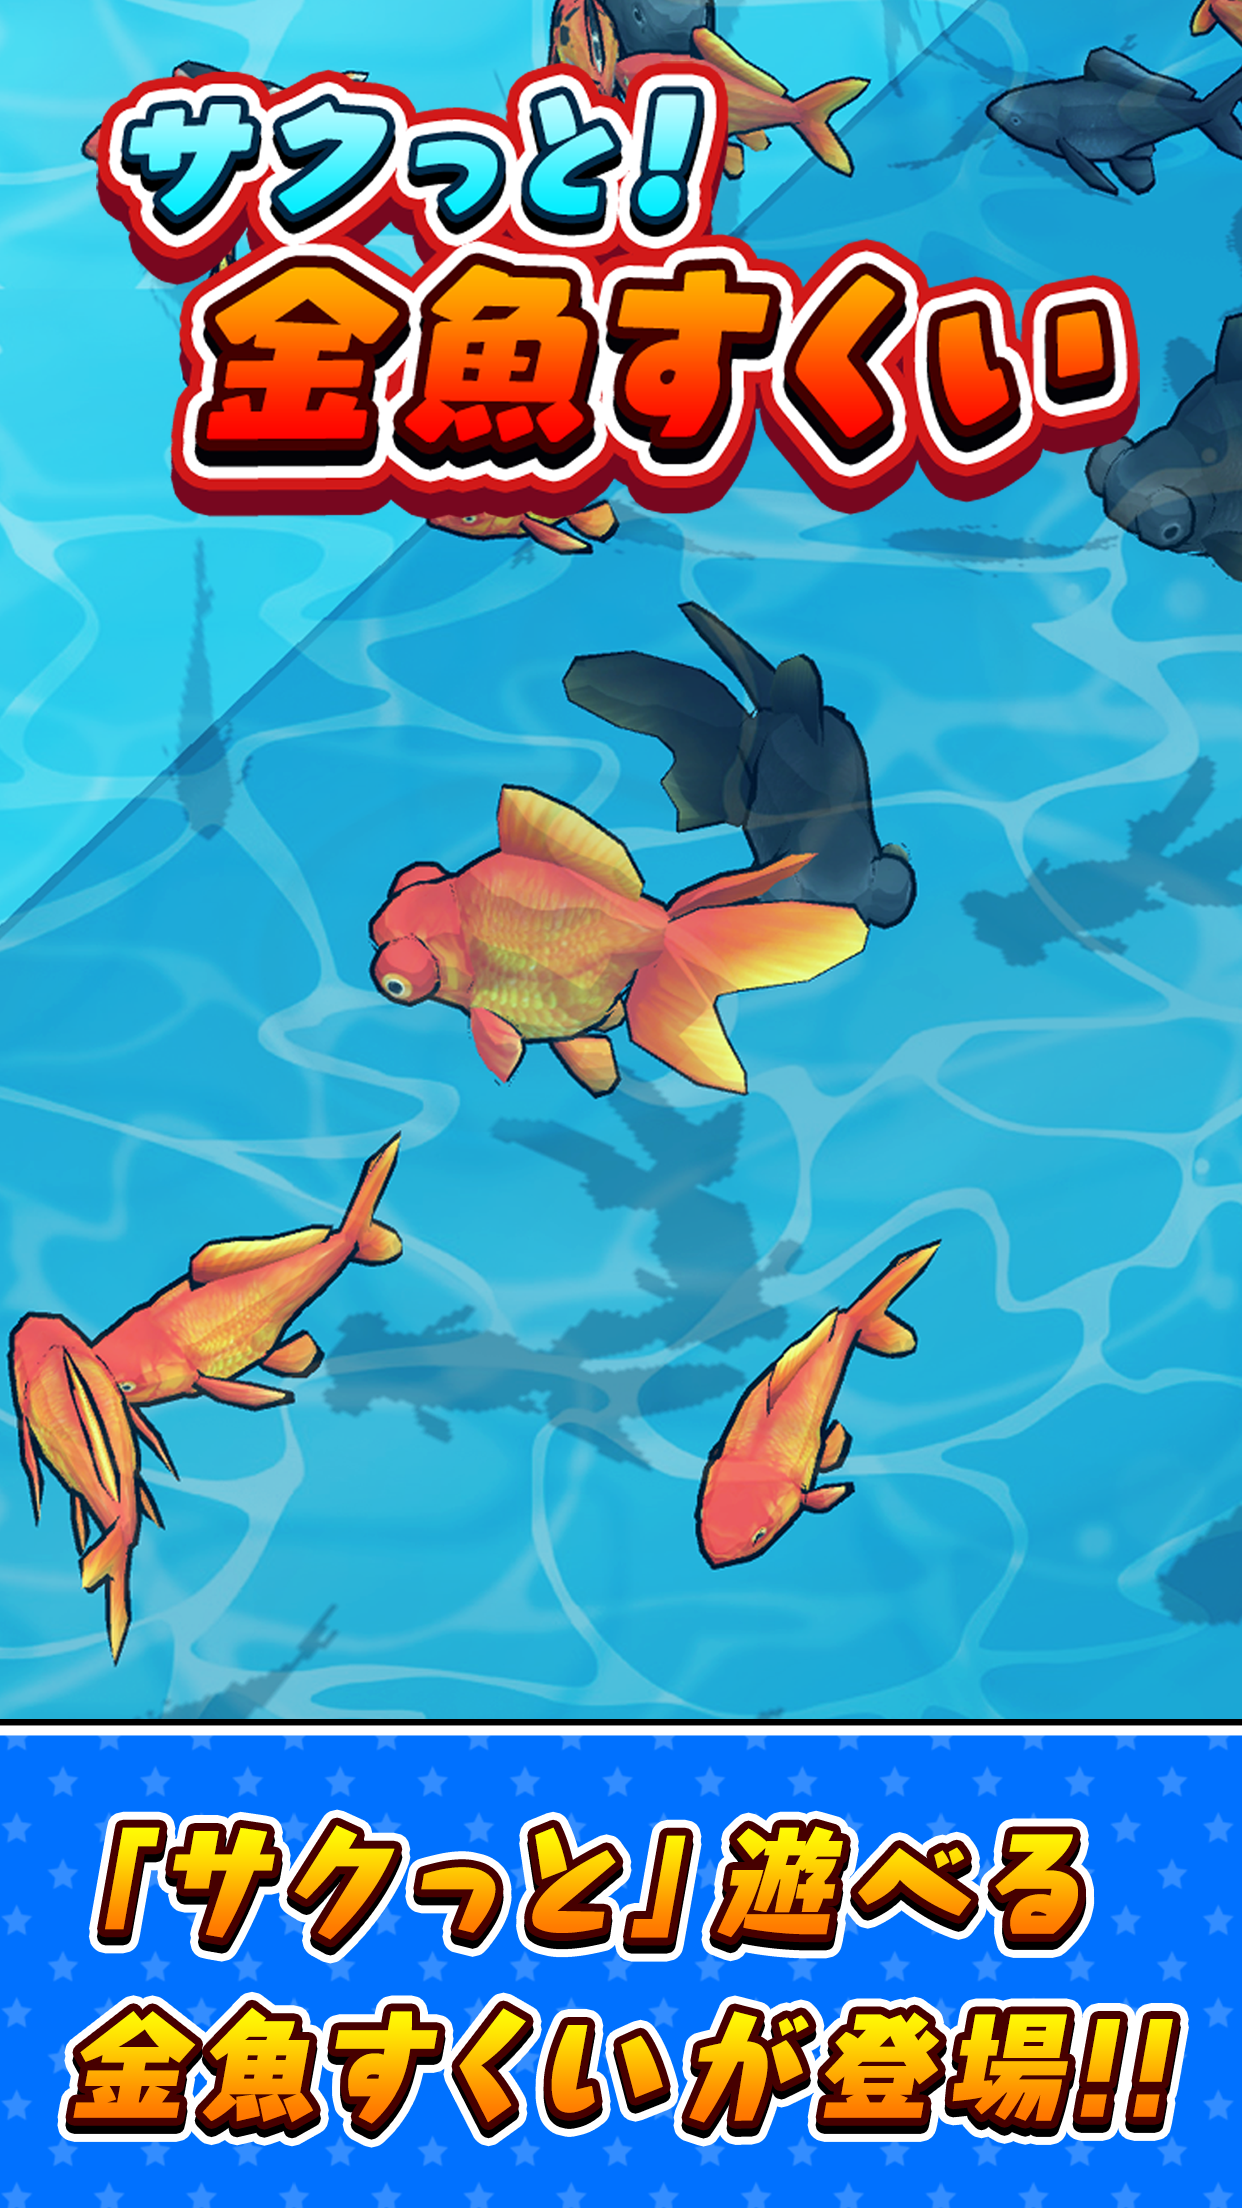 Screenshot 1 of Quickly! Goldfish scooping 1.0.6